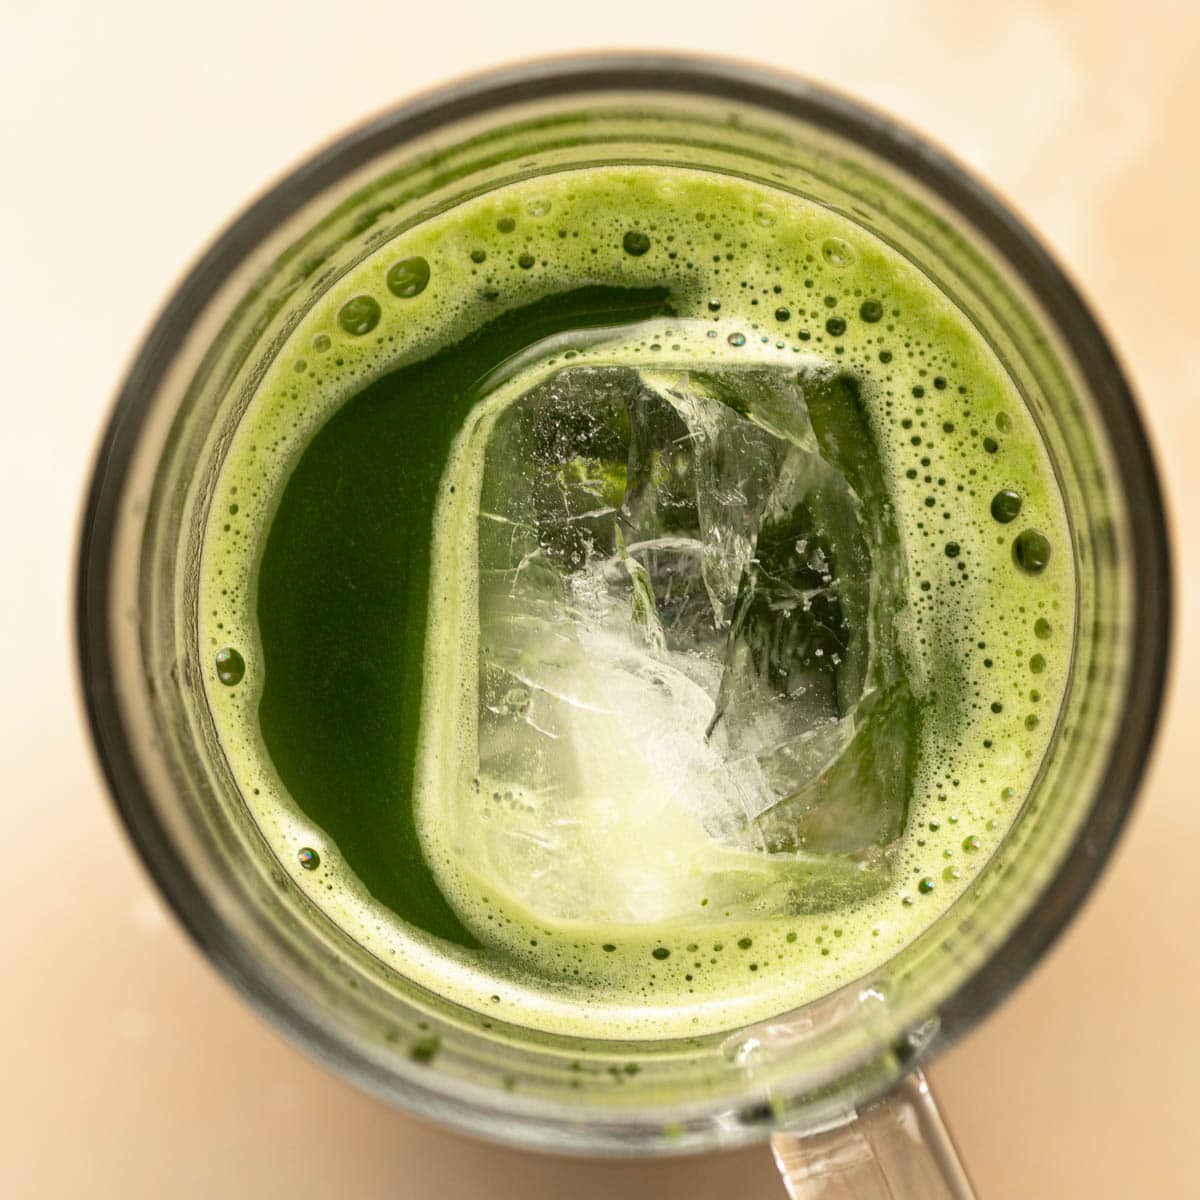 Cold Brew Matcha - Easy Iced Green Tea in Seconds - My Vegan Minimalist